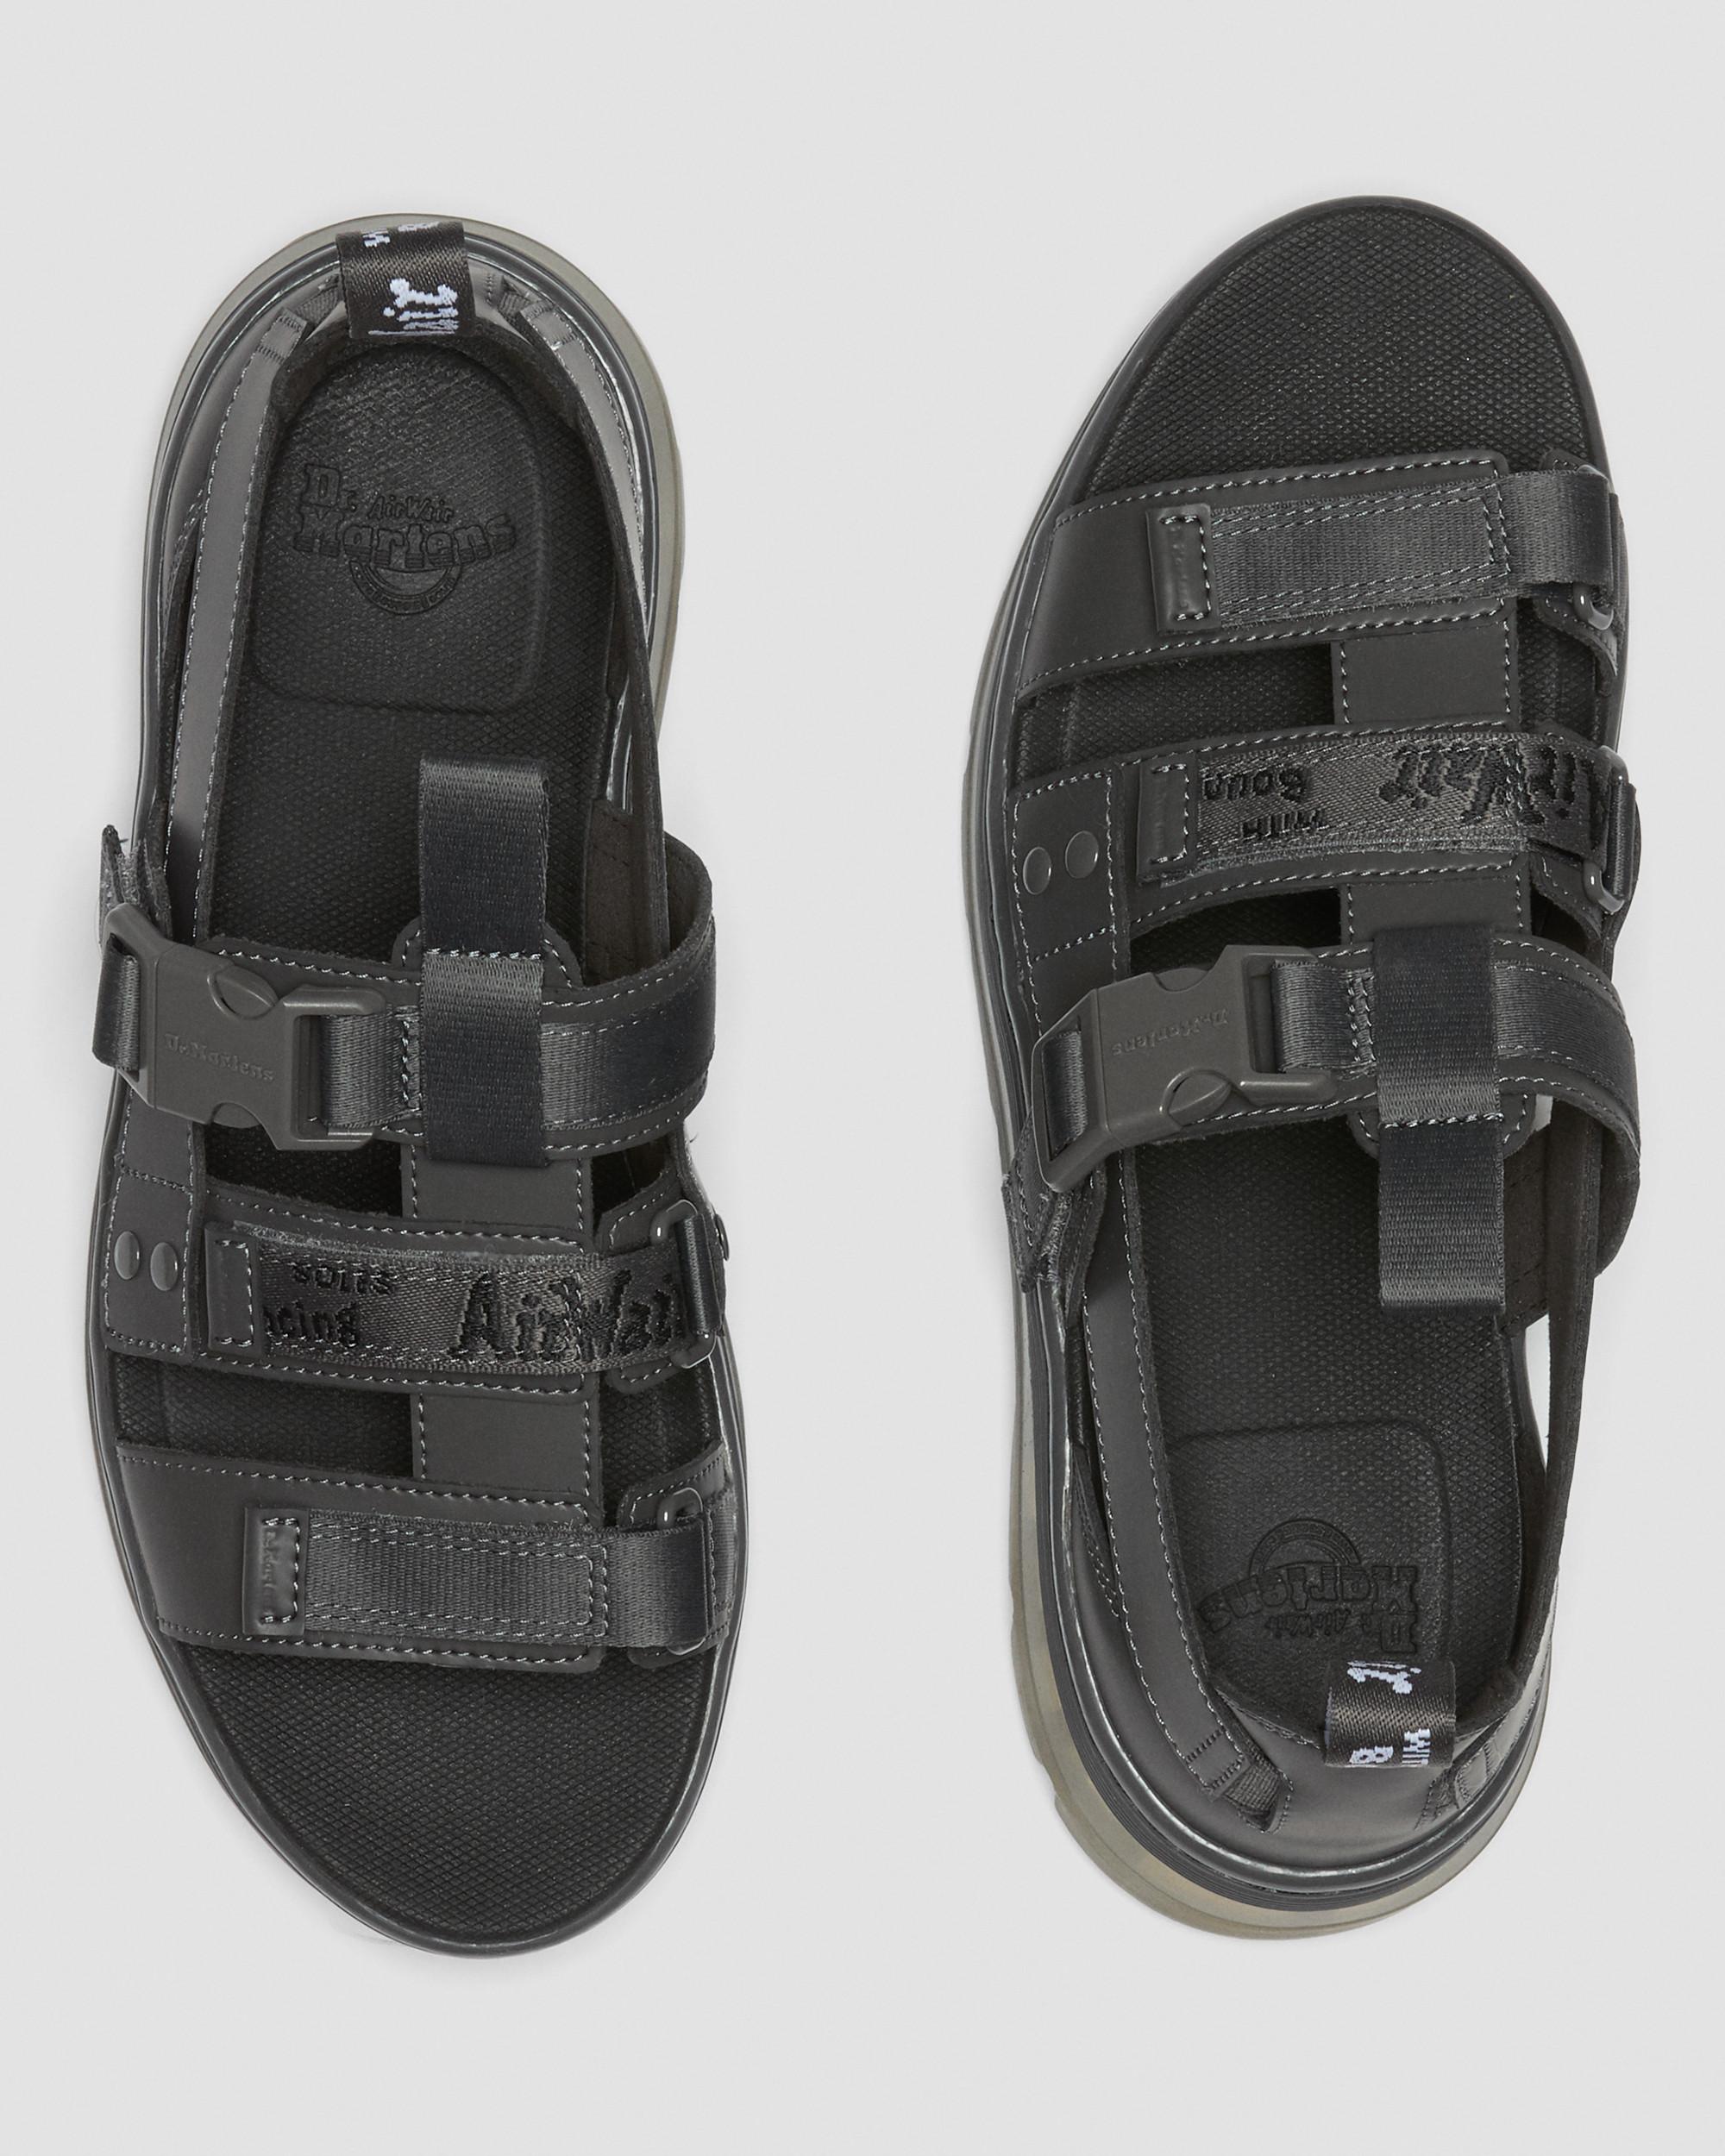 Pearson Iced Webbing Sandals in Gunmetal | Dr. Martens